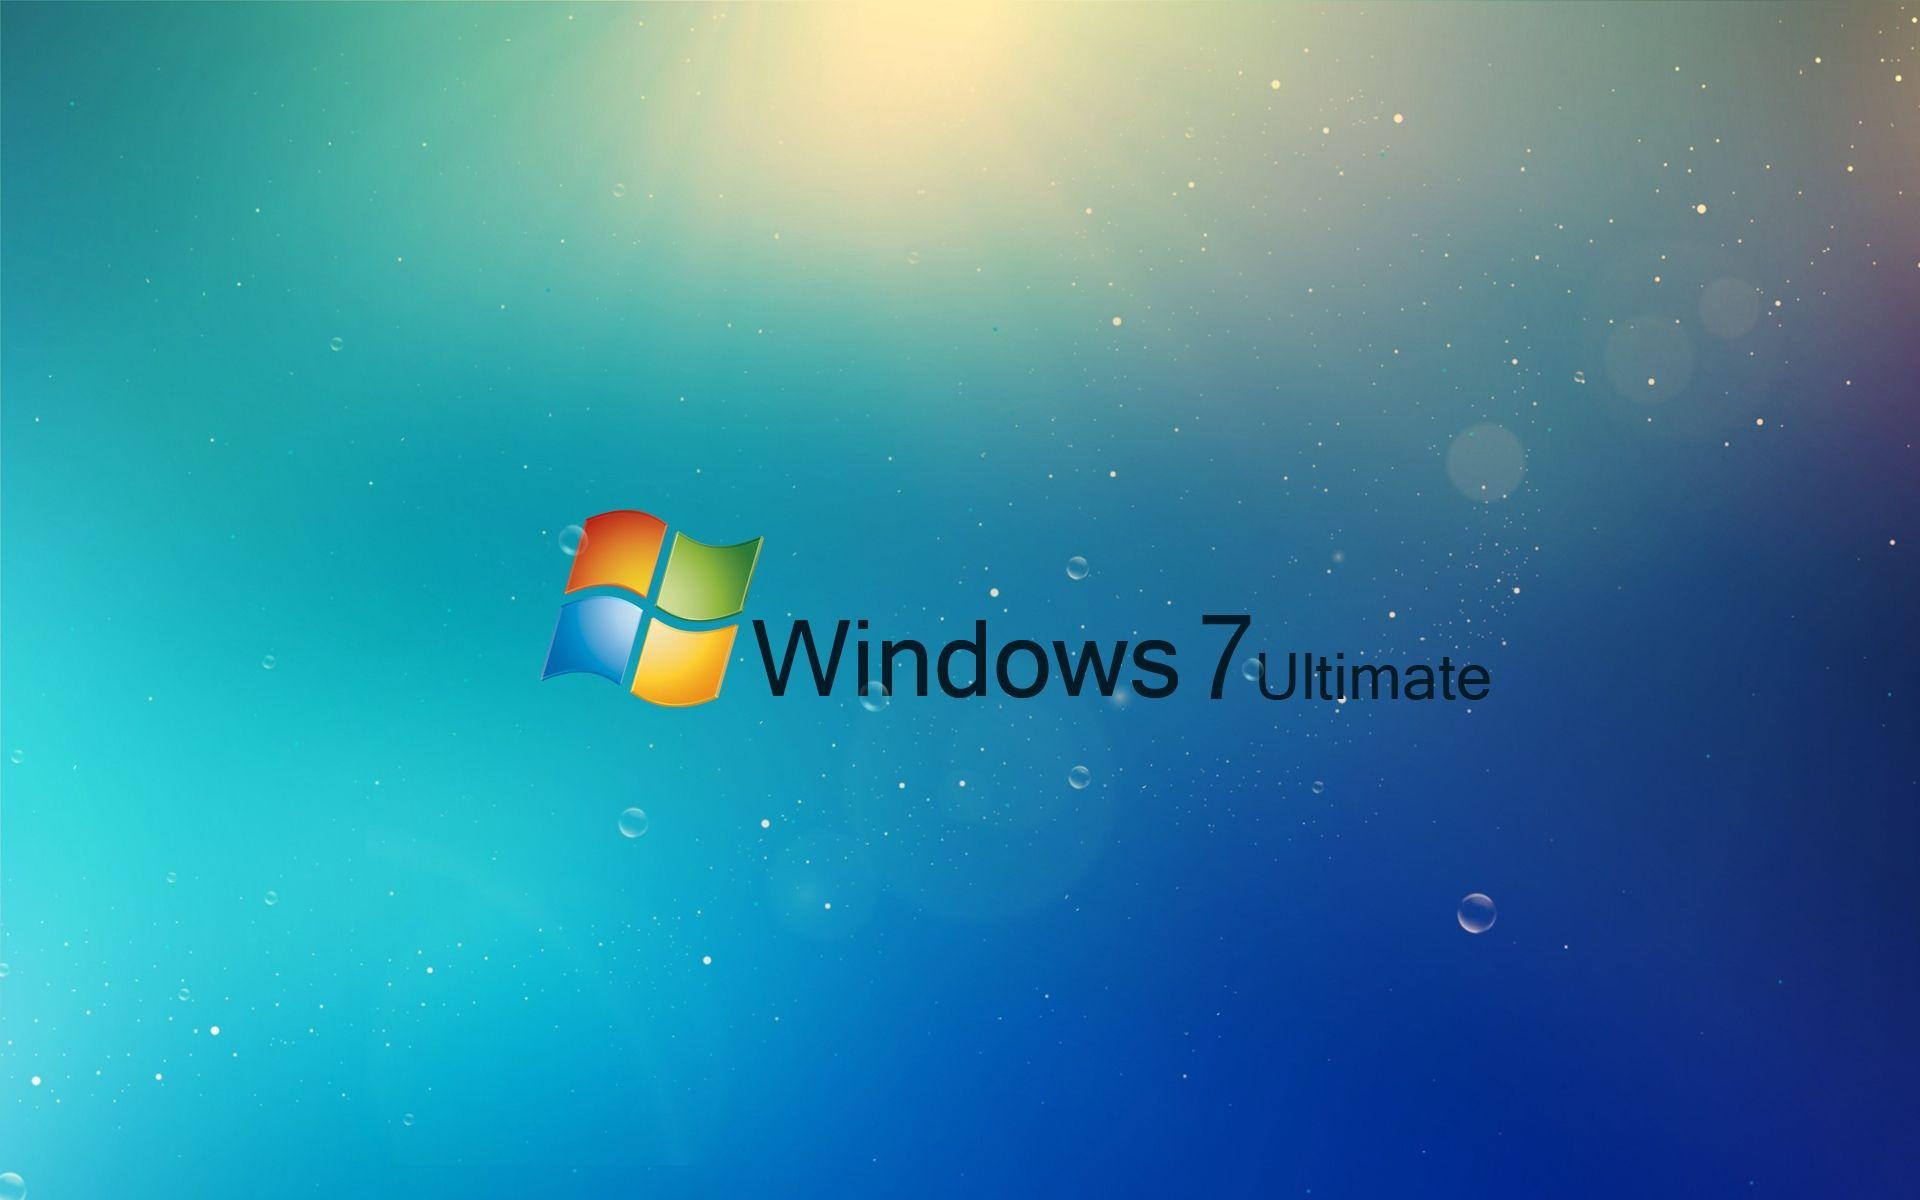 Wallpaper Windows 7 Ultimate Hd 3d For Laptop Image Num 15